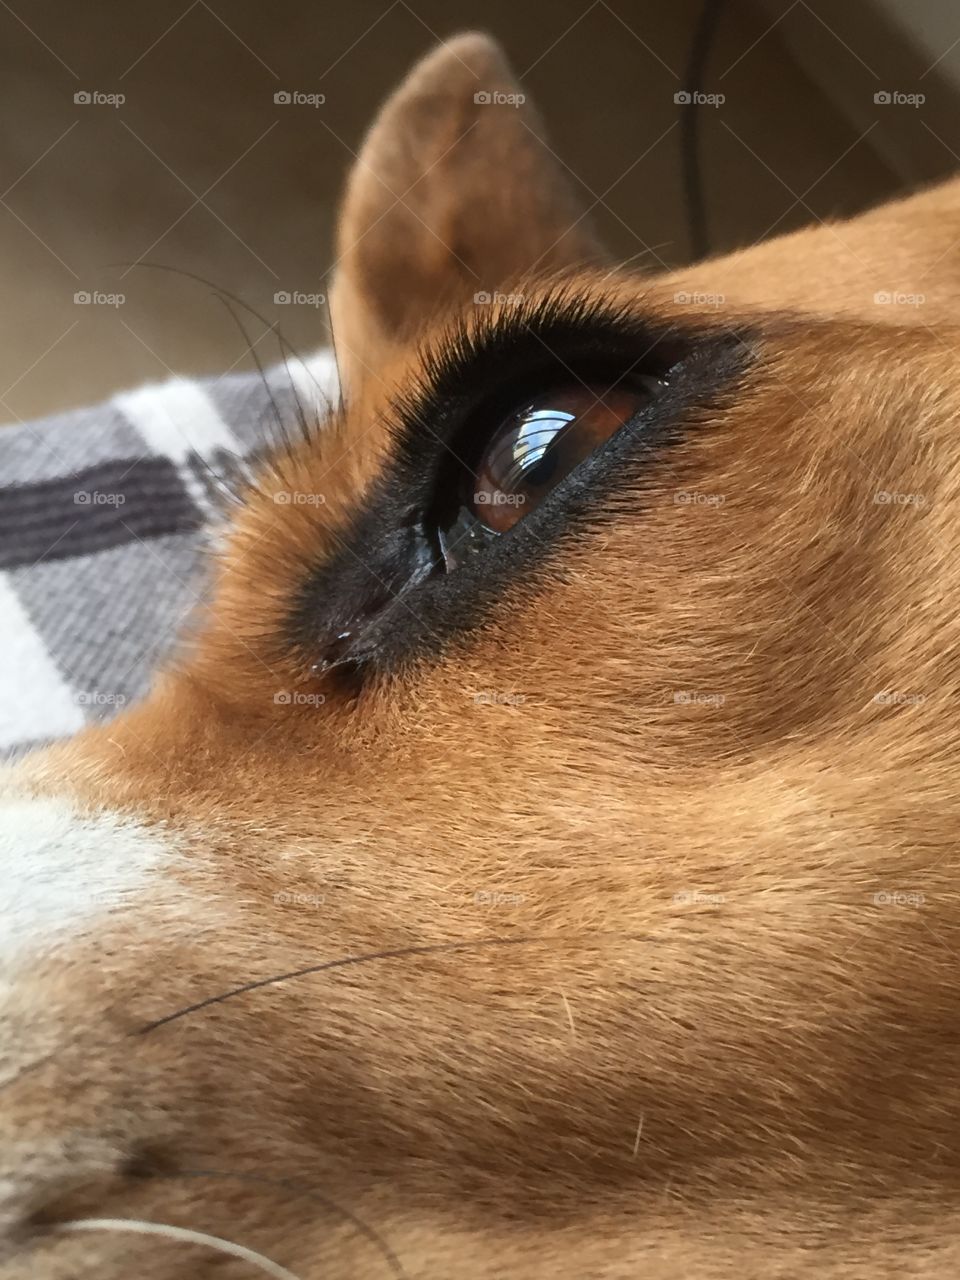 Beagle's eyes are just as cute as their ears 😋